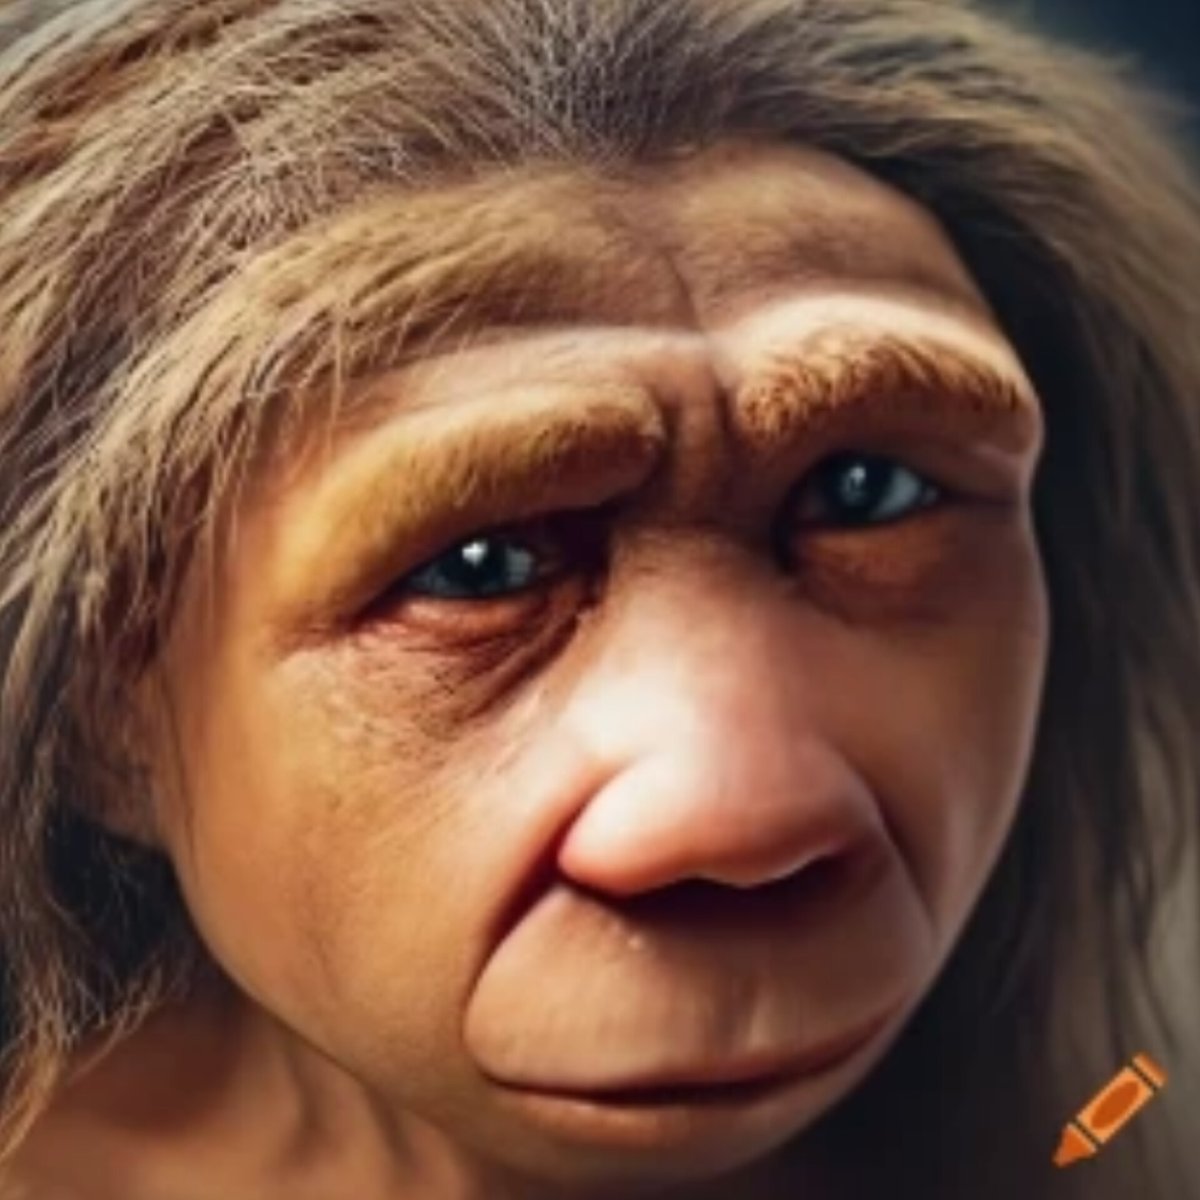 That #Neanderthal stare
#craiyonai #craiyon #NFT #NFTs 
#aiart #Generativeart #GenerativeAI 
#artgenerators #caveart #thatstare
#stare #thelook #theeyeshaveit #eyes #EyeContact #prehistoric
#prehistory #paleoart #paleontology #anthropology